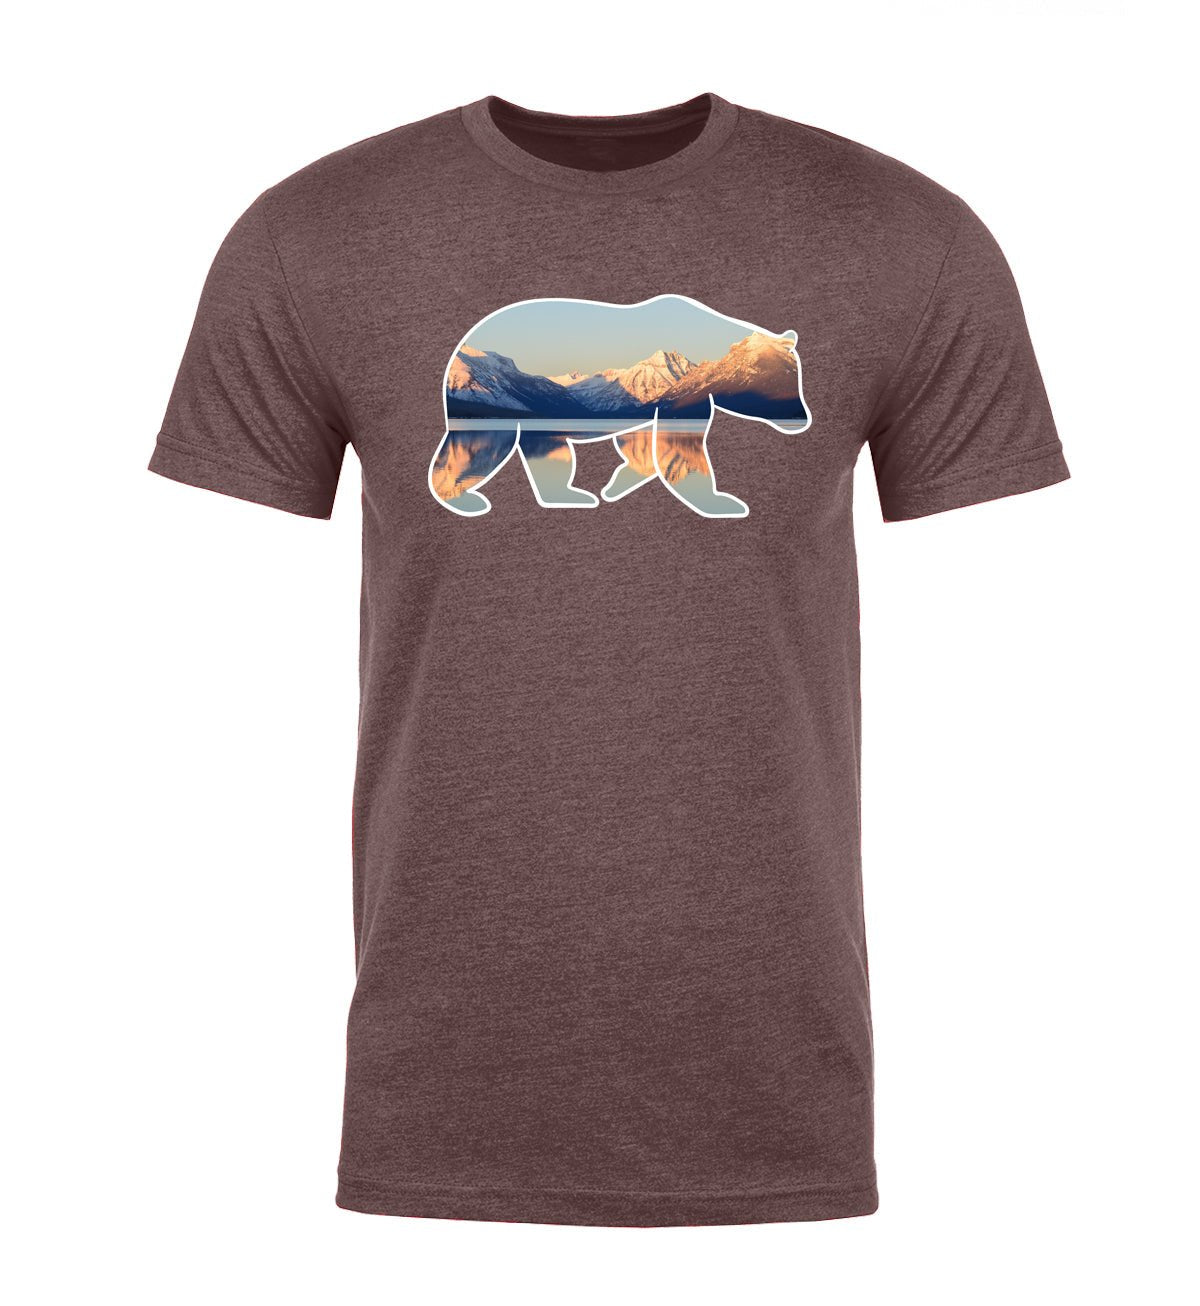 Shirt - Mountains In Bear Graphic Shirt , Wildlife T-shirts, Men's Tee Shirts